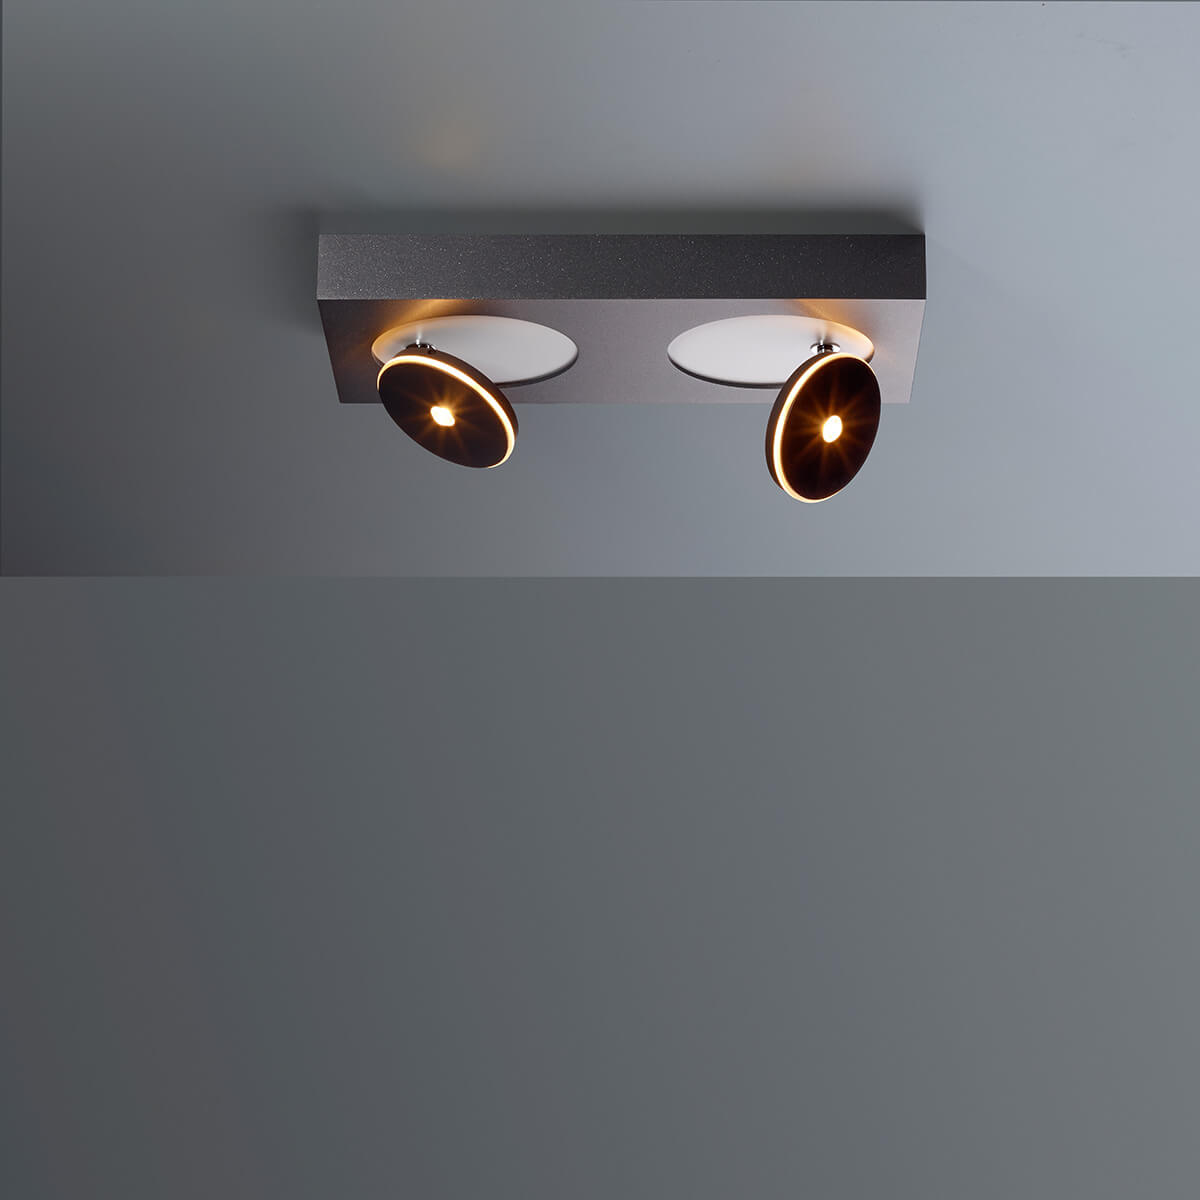 Escale rechteckig, It Spot LED Deckenleuchte, Casambi-Modul mit